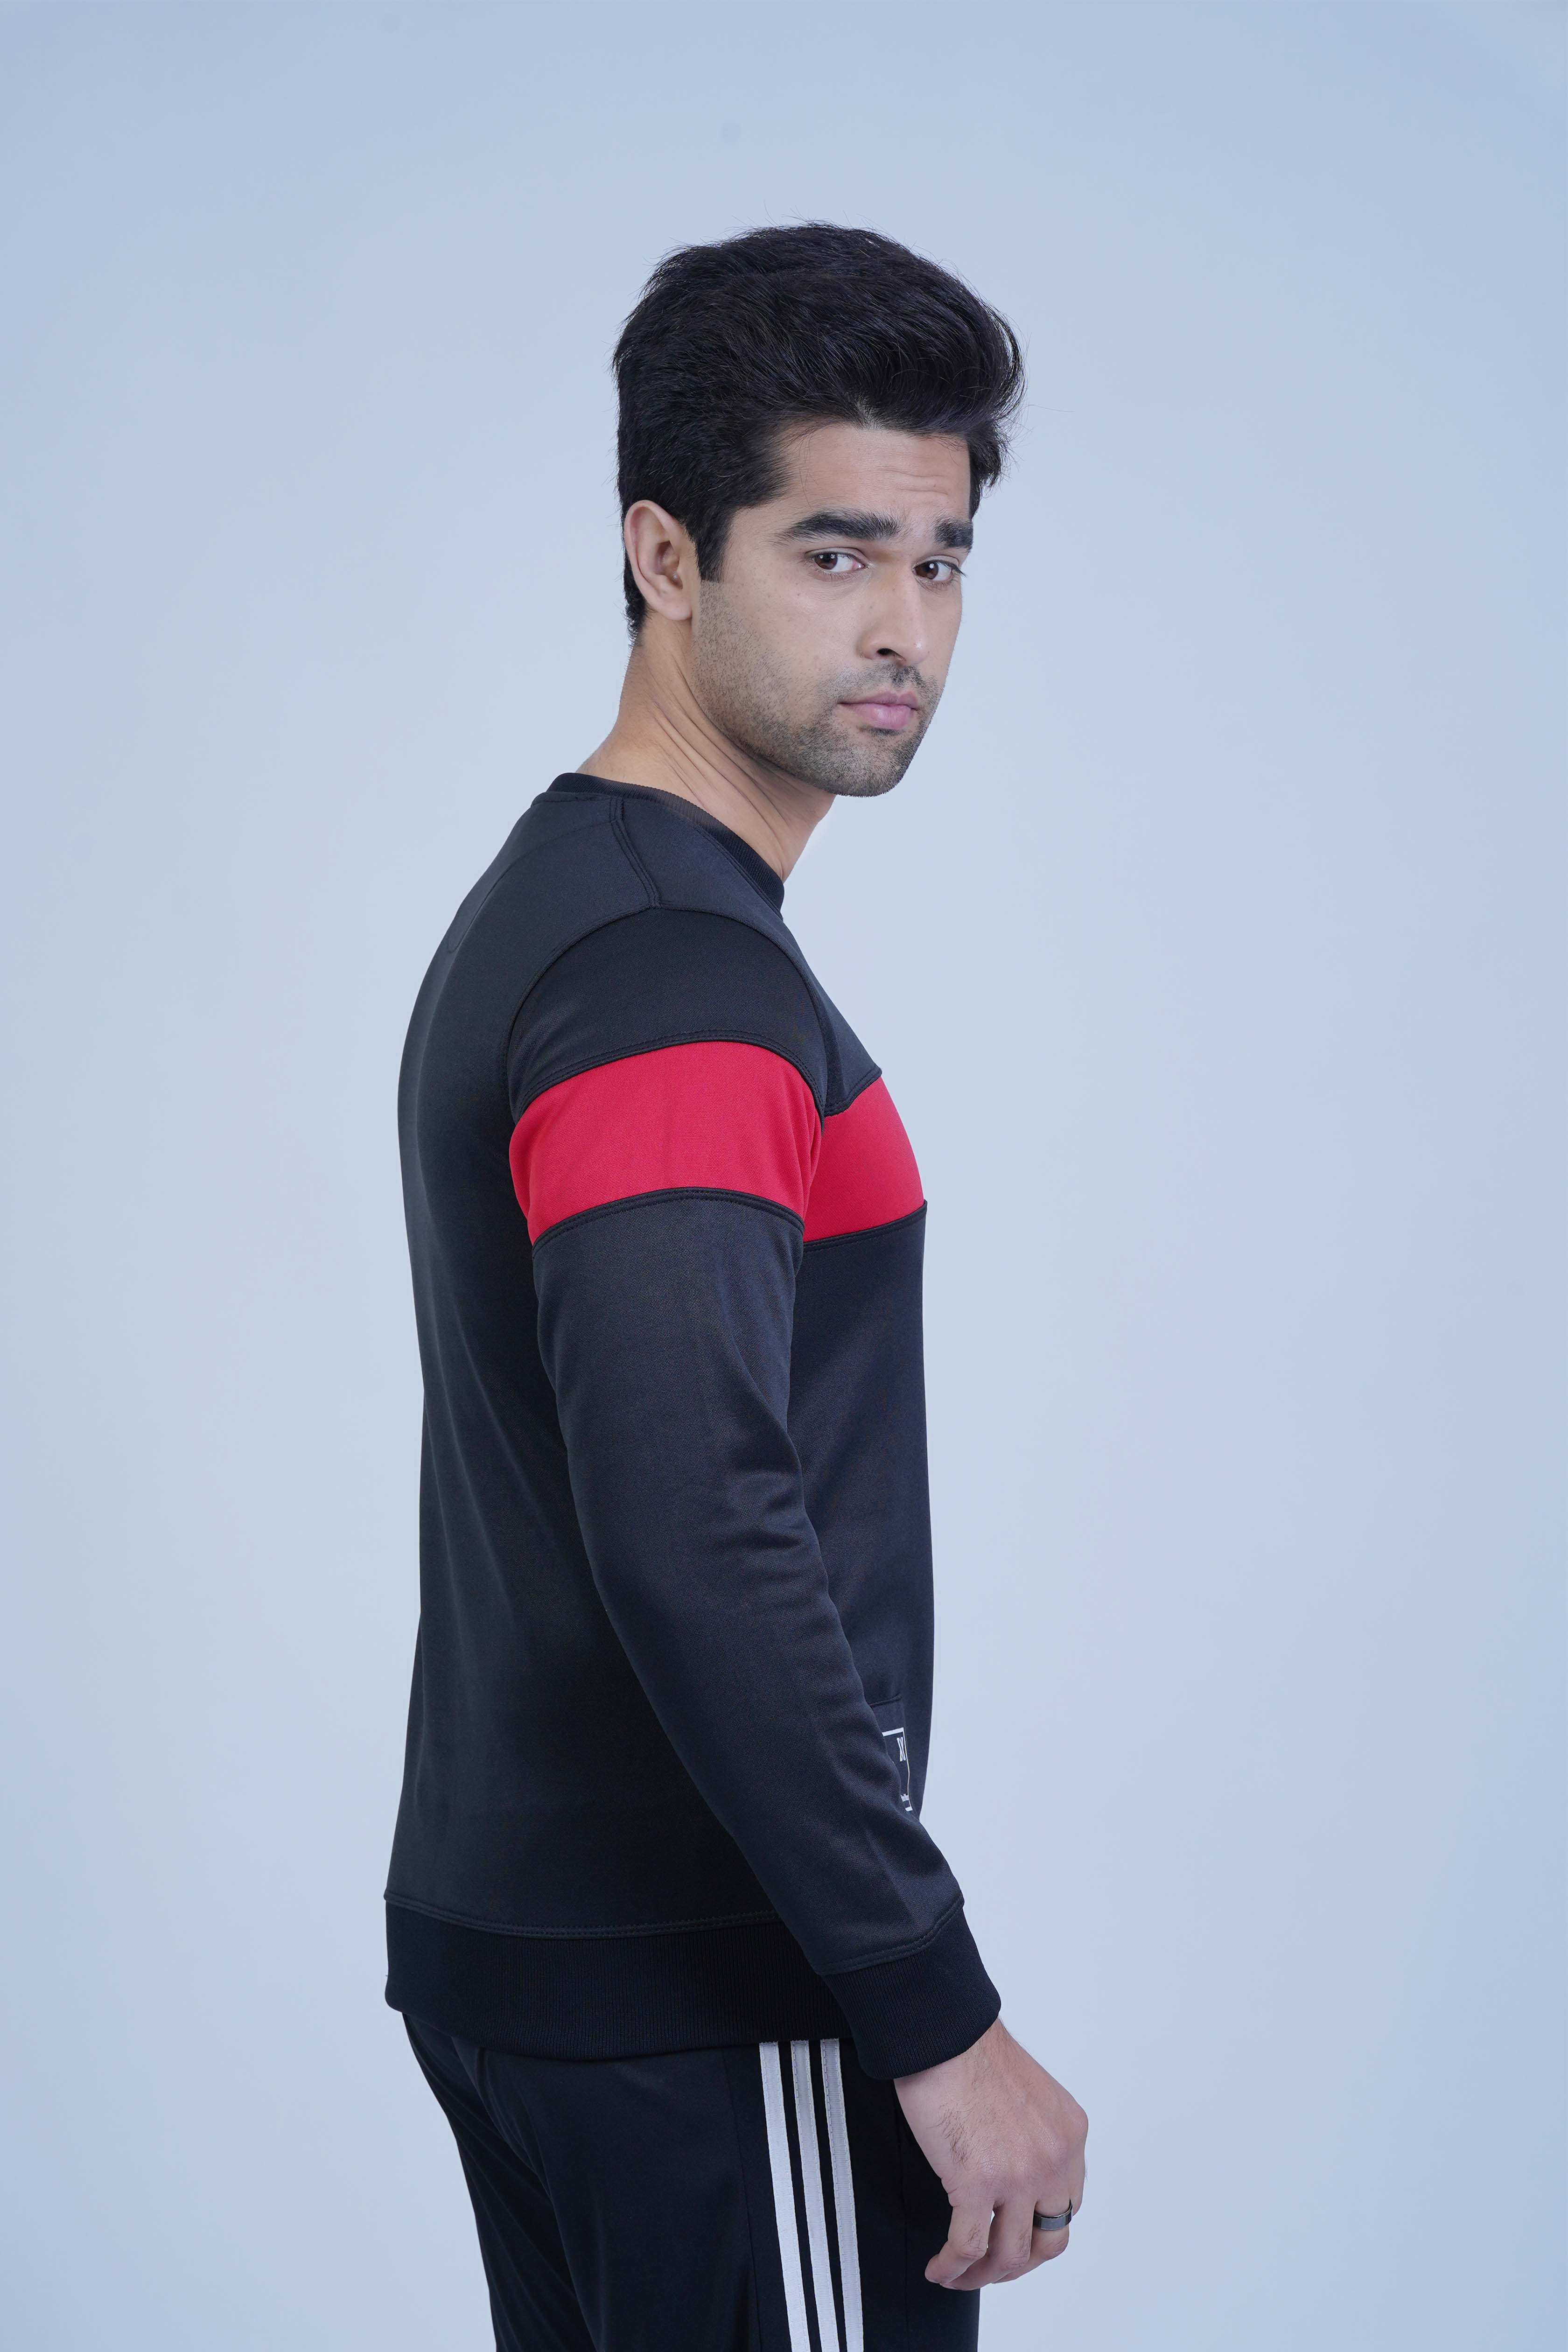 Premium Quality: Urban Stripe Black Sweatshirt by The Xea